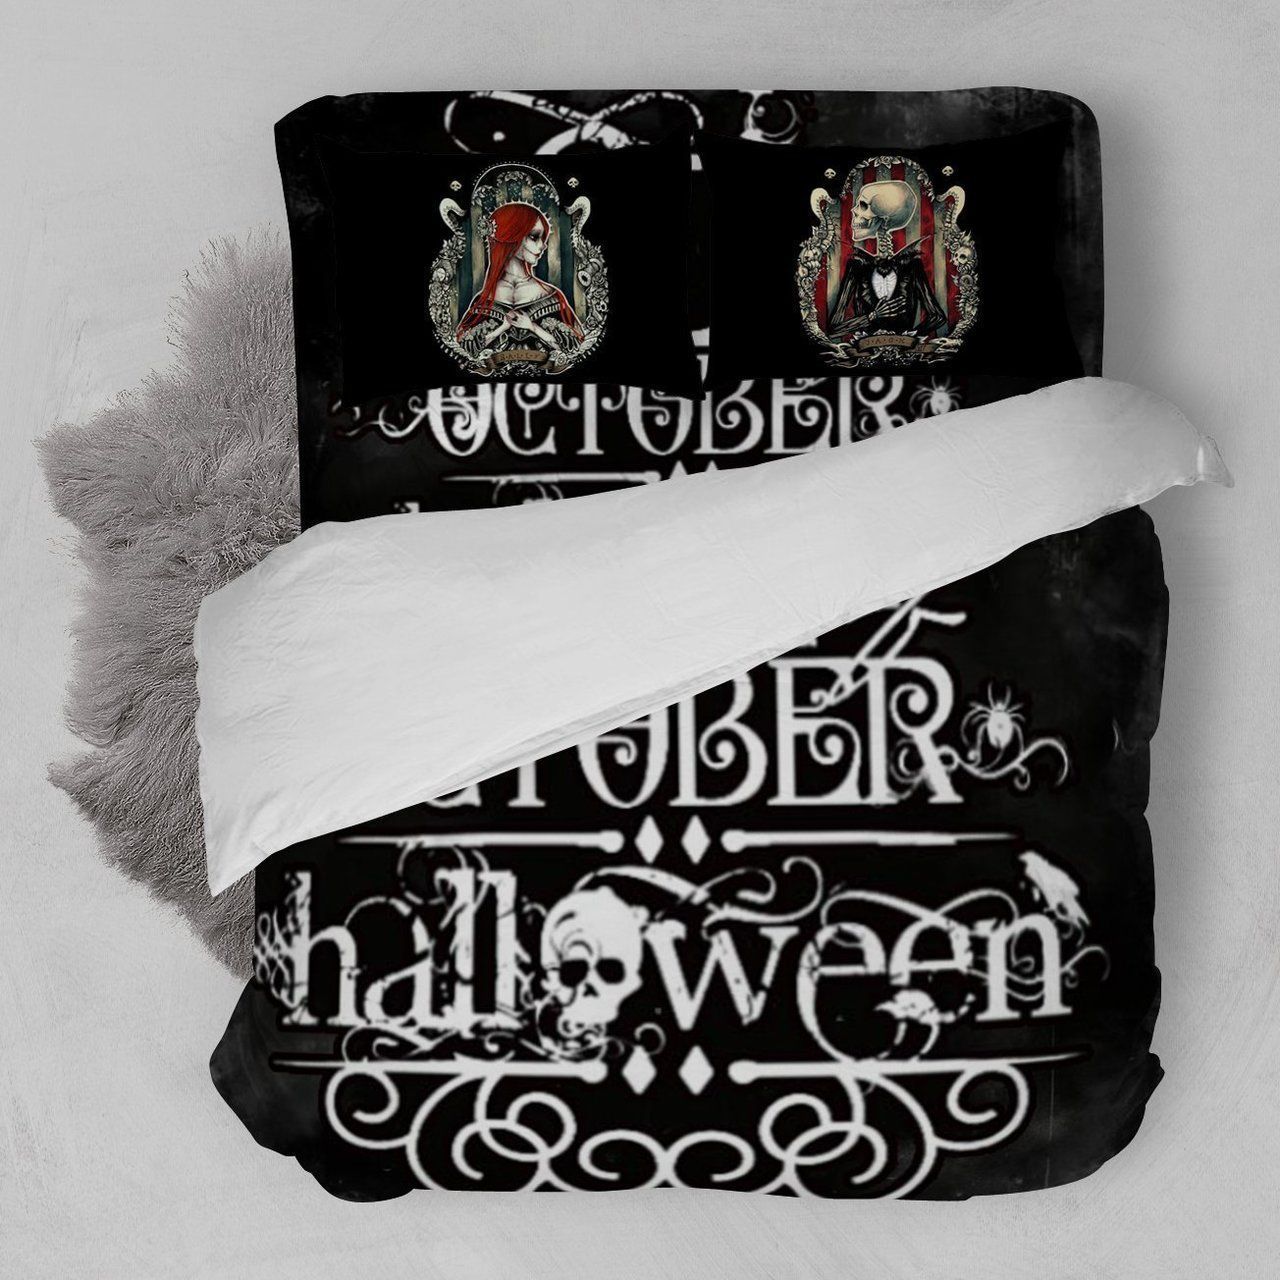 31St October Halloween Bedding Set